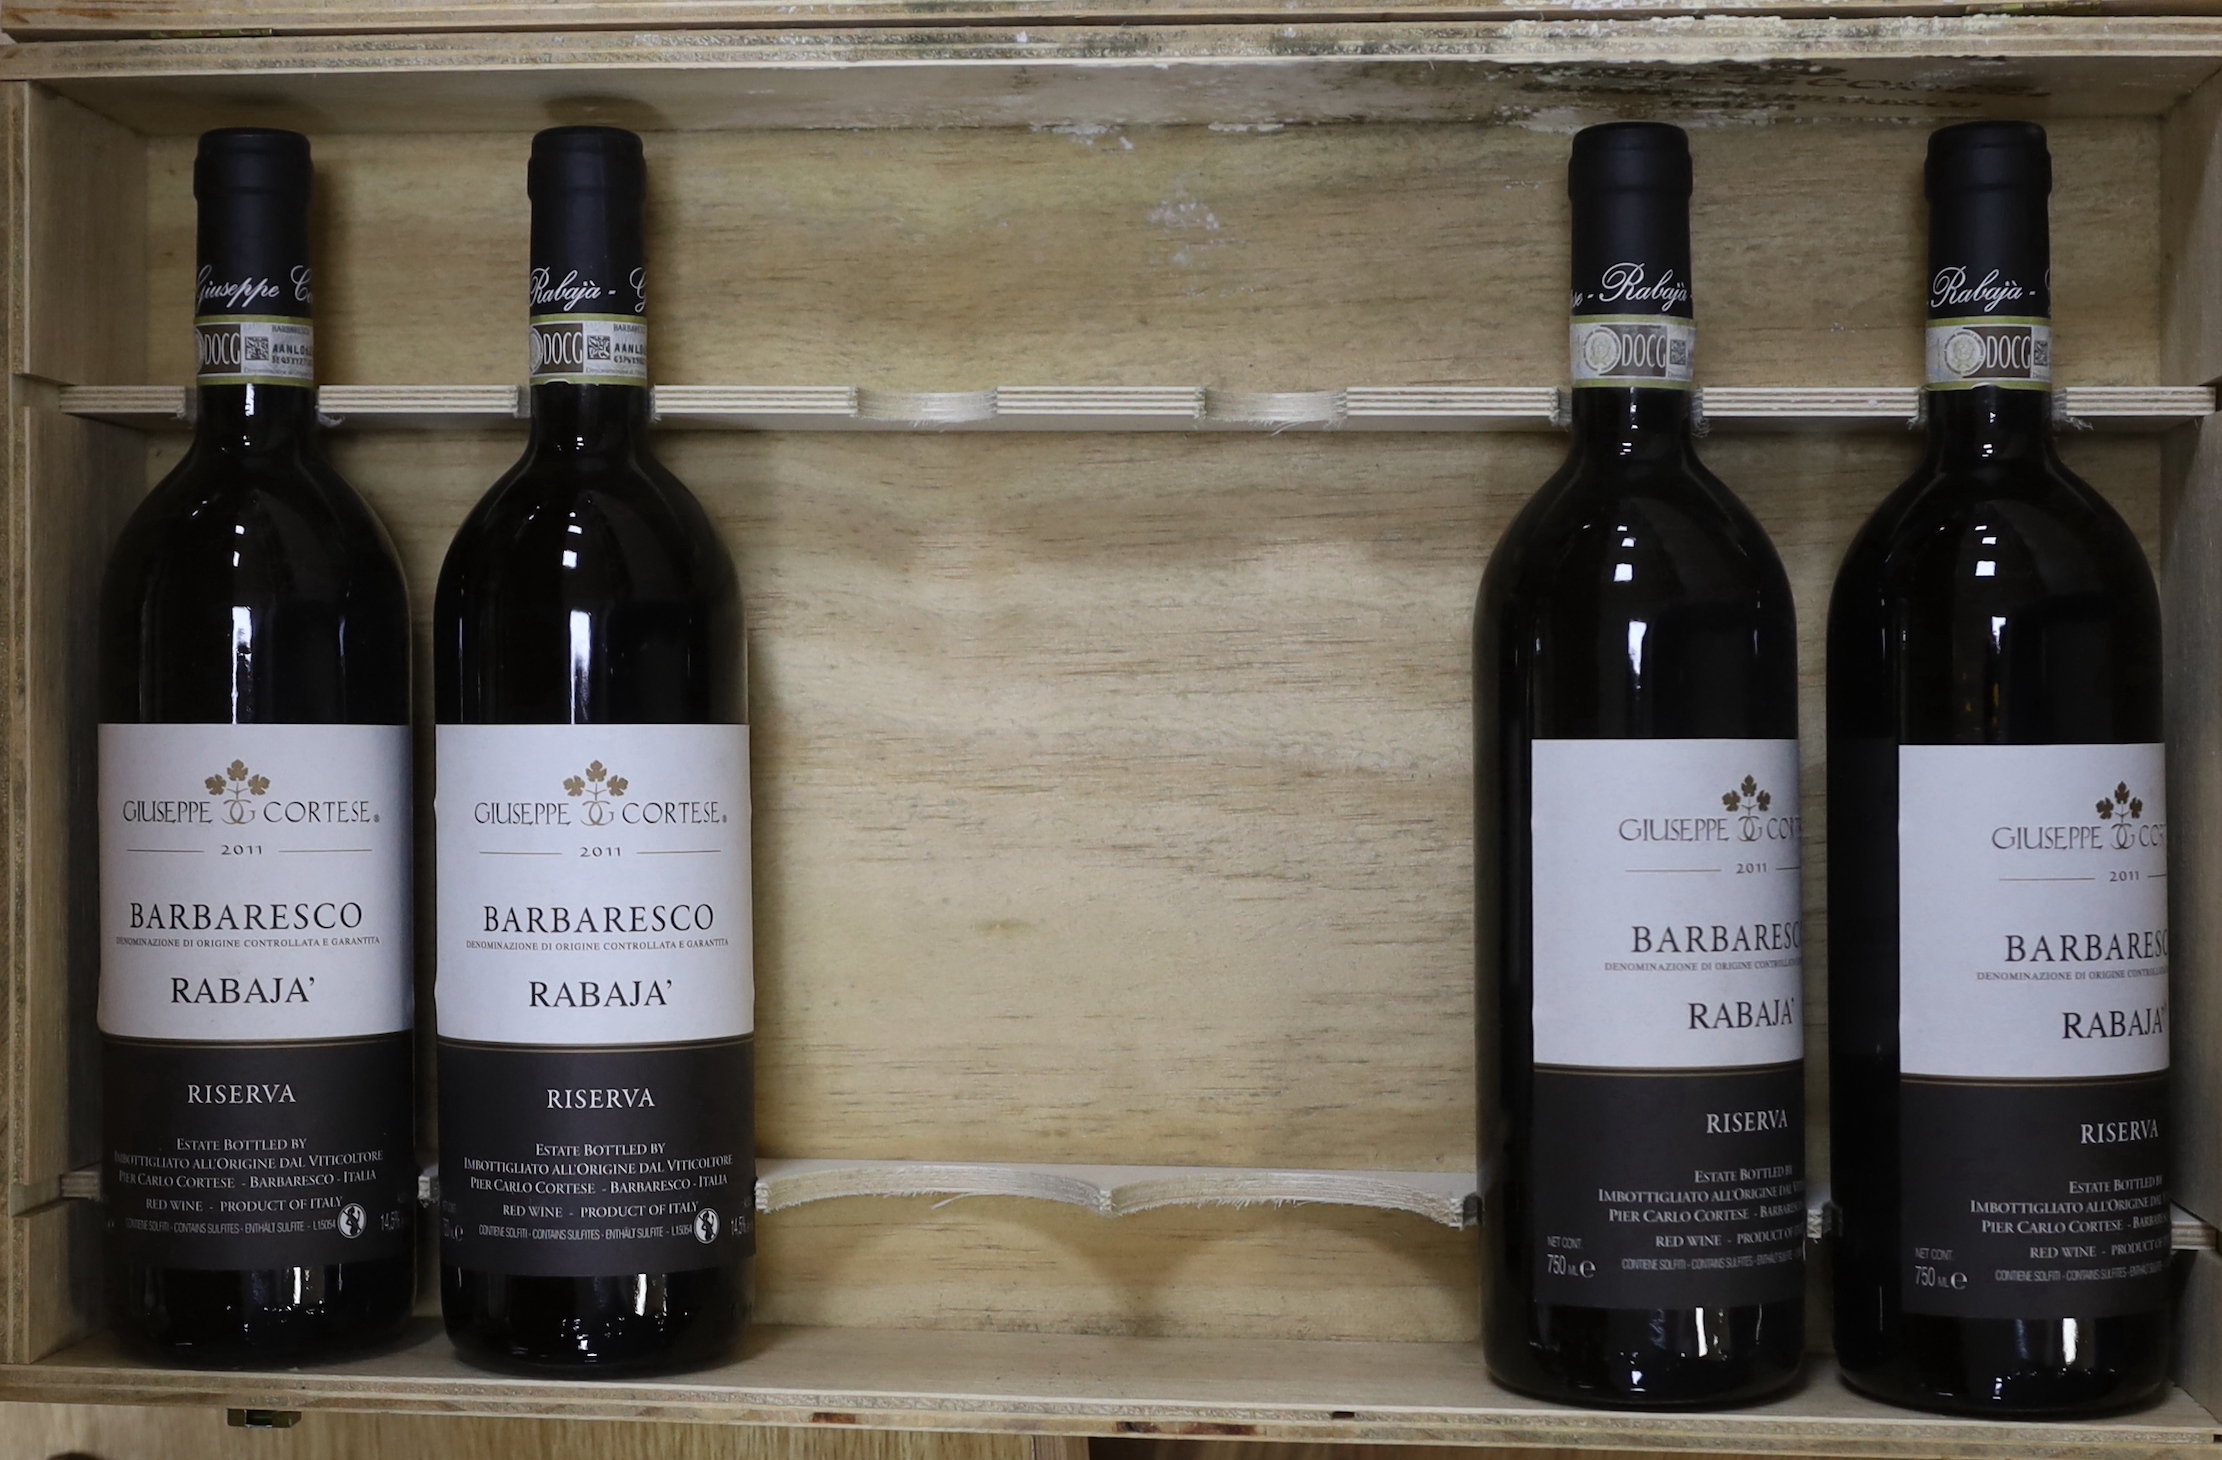 Four bottles of Giuseppe Cortese Barbaresco Cru Rabaja Riserva 2011, OWC